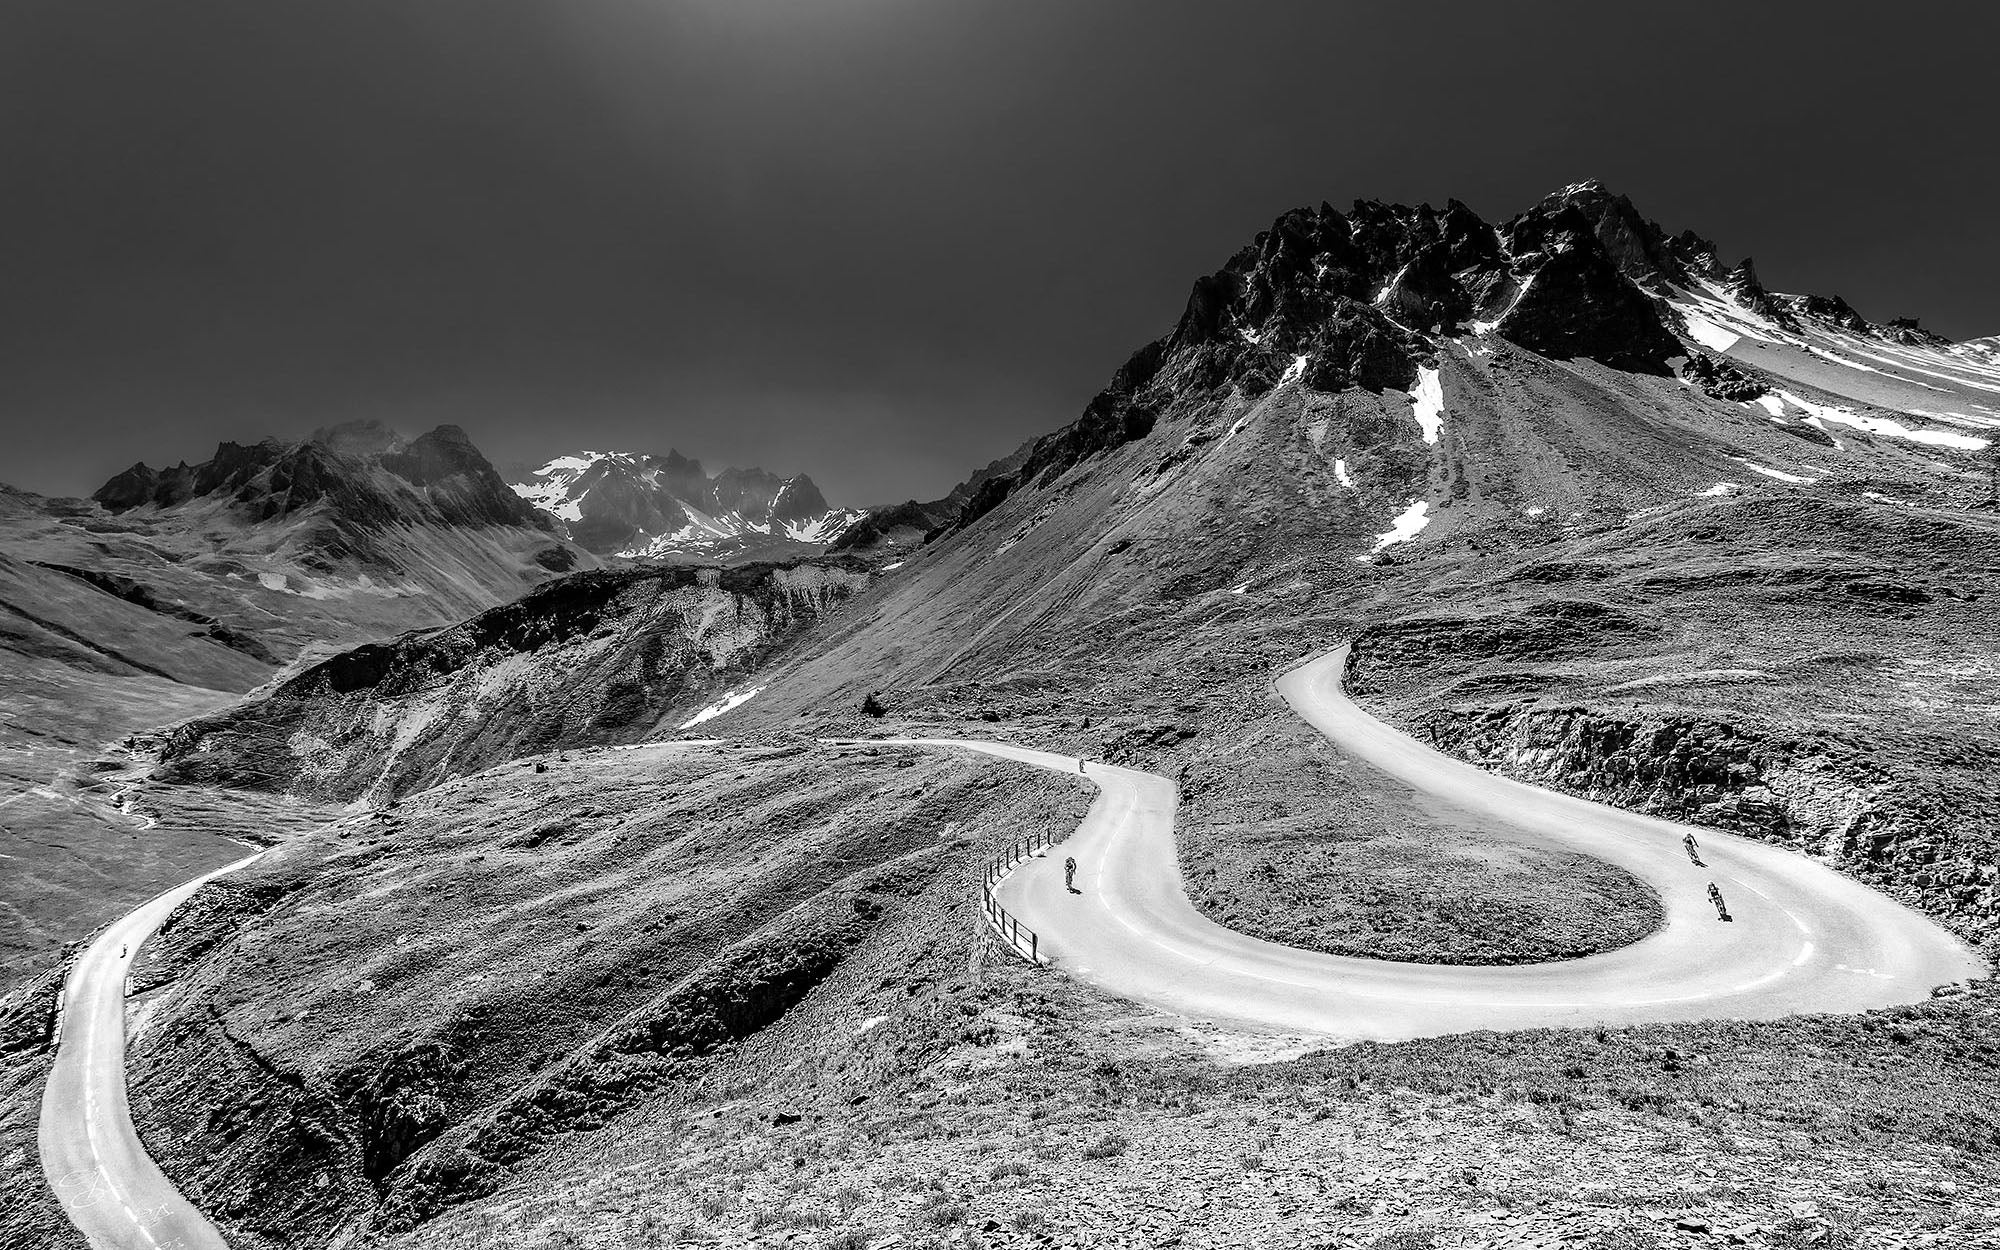 Col du Galibier - Cycling landscape photography prints by davidt